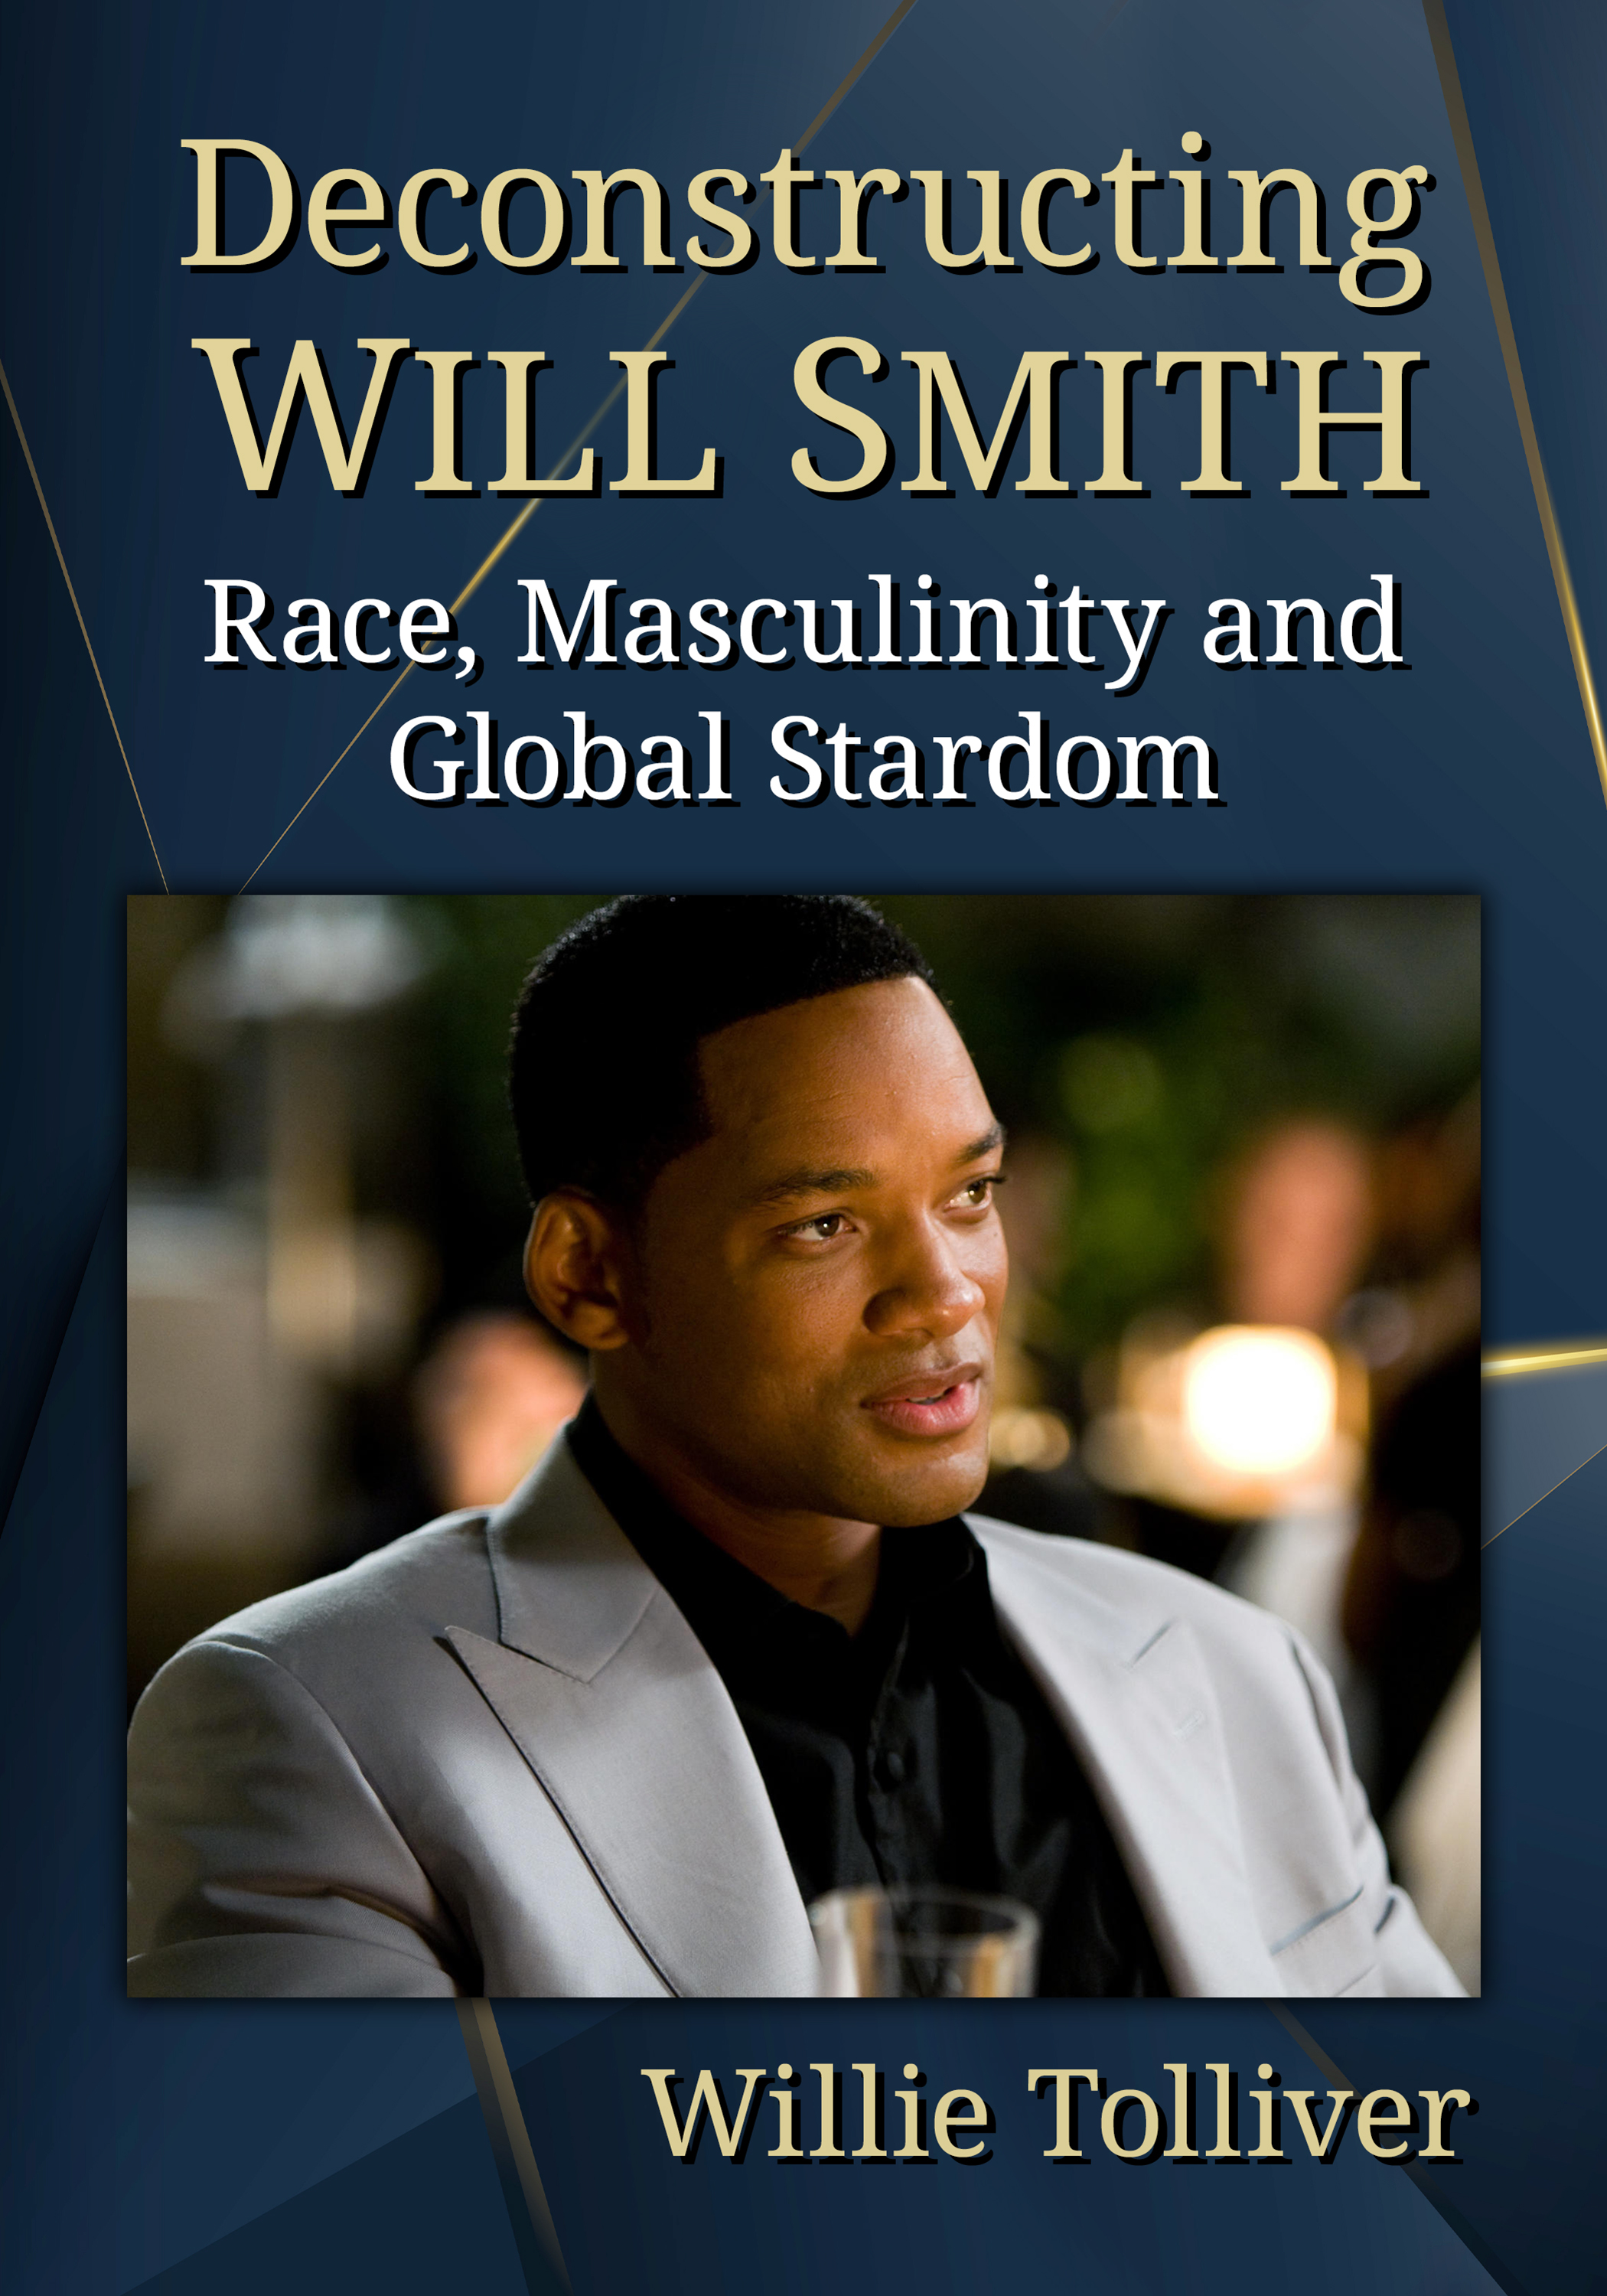 Deconstructing Will Smith ISBN print 978-1-4766-7569-5 ISBN ebook - photo 1